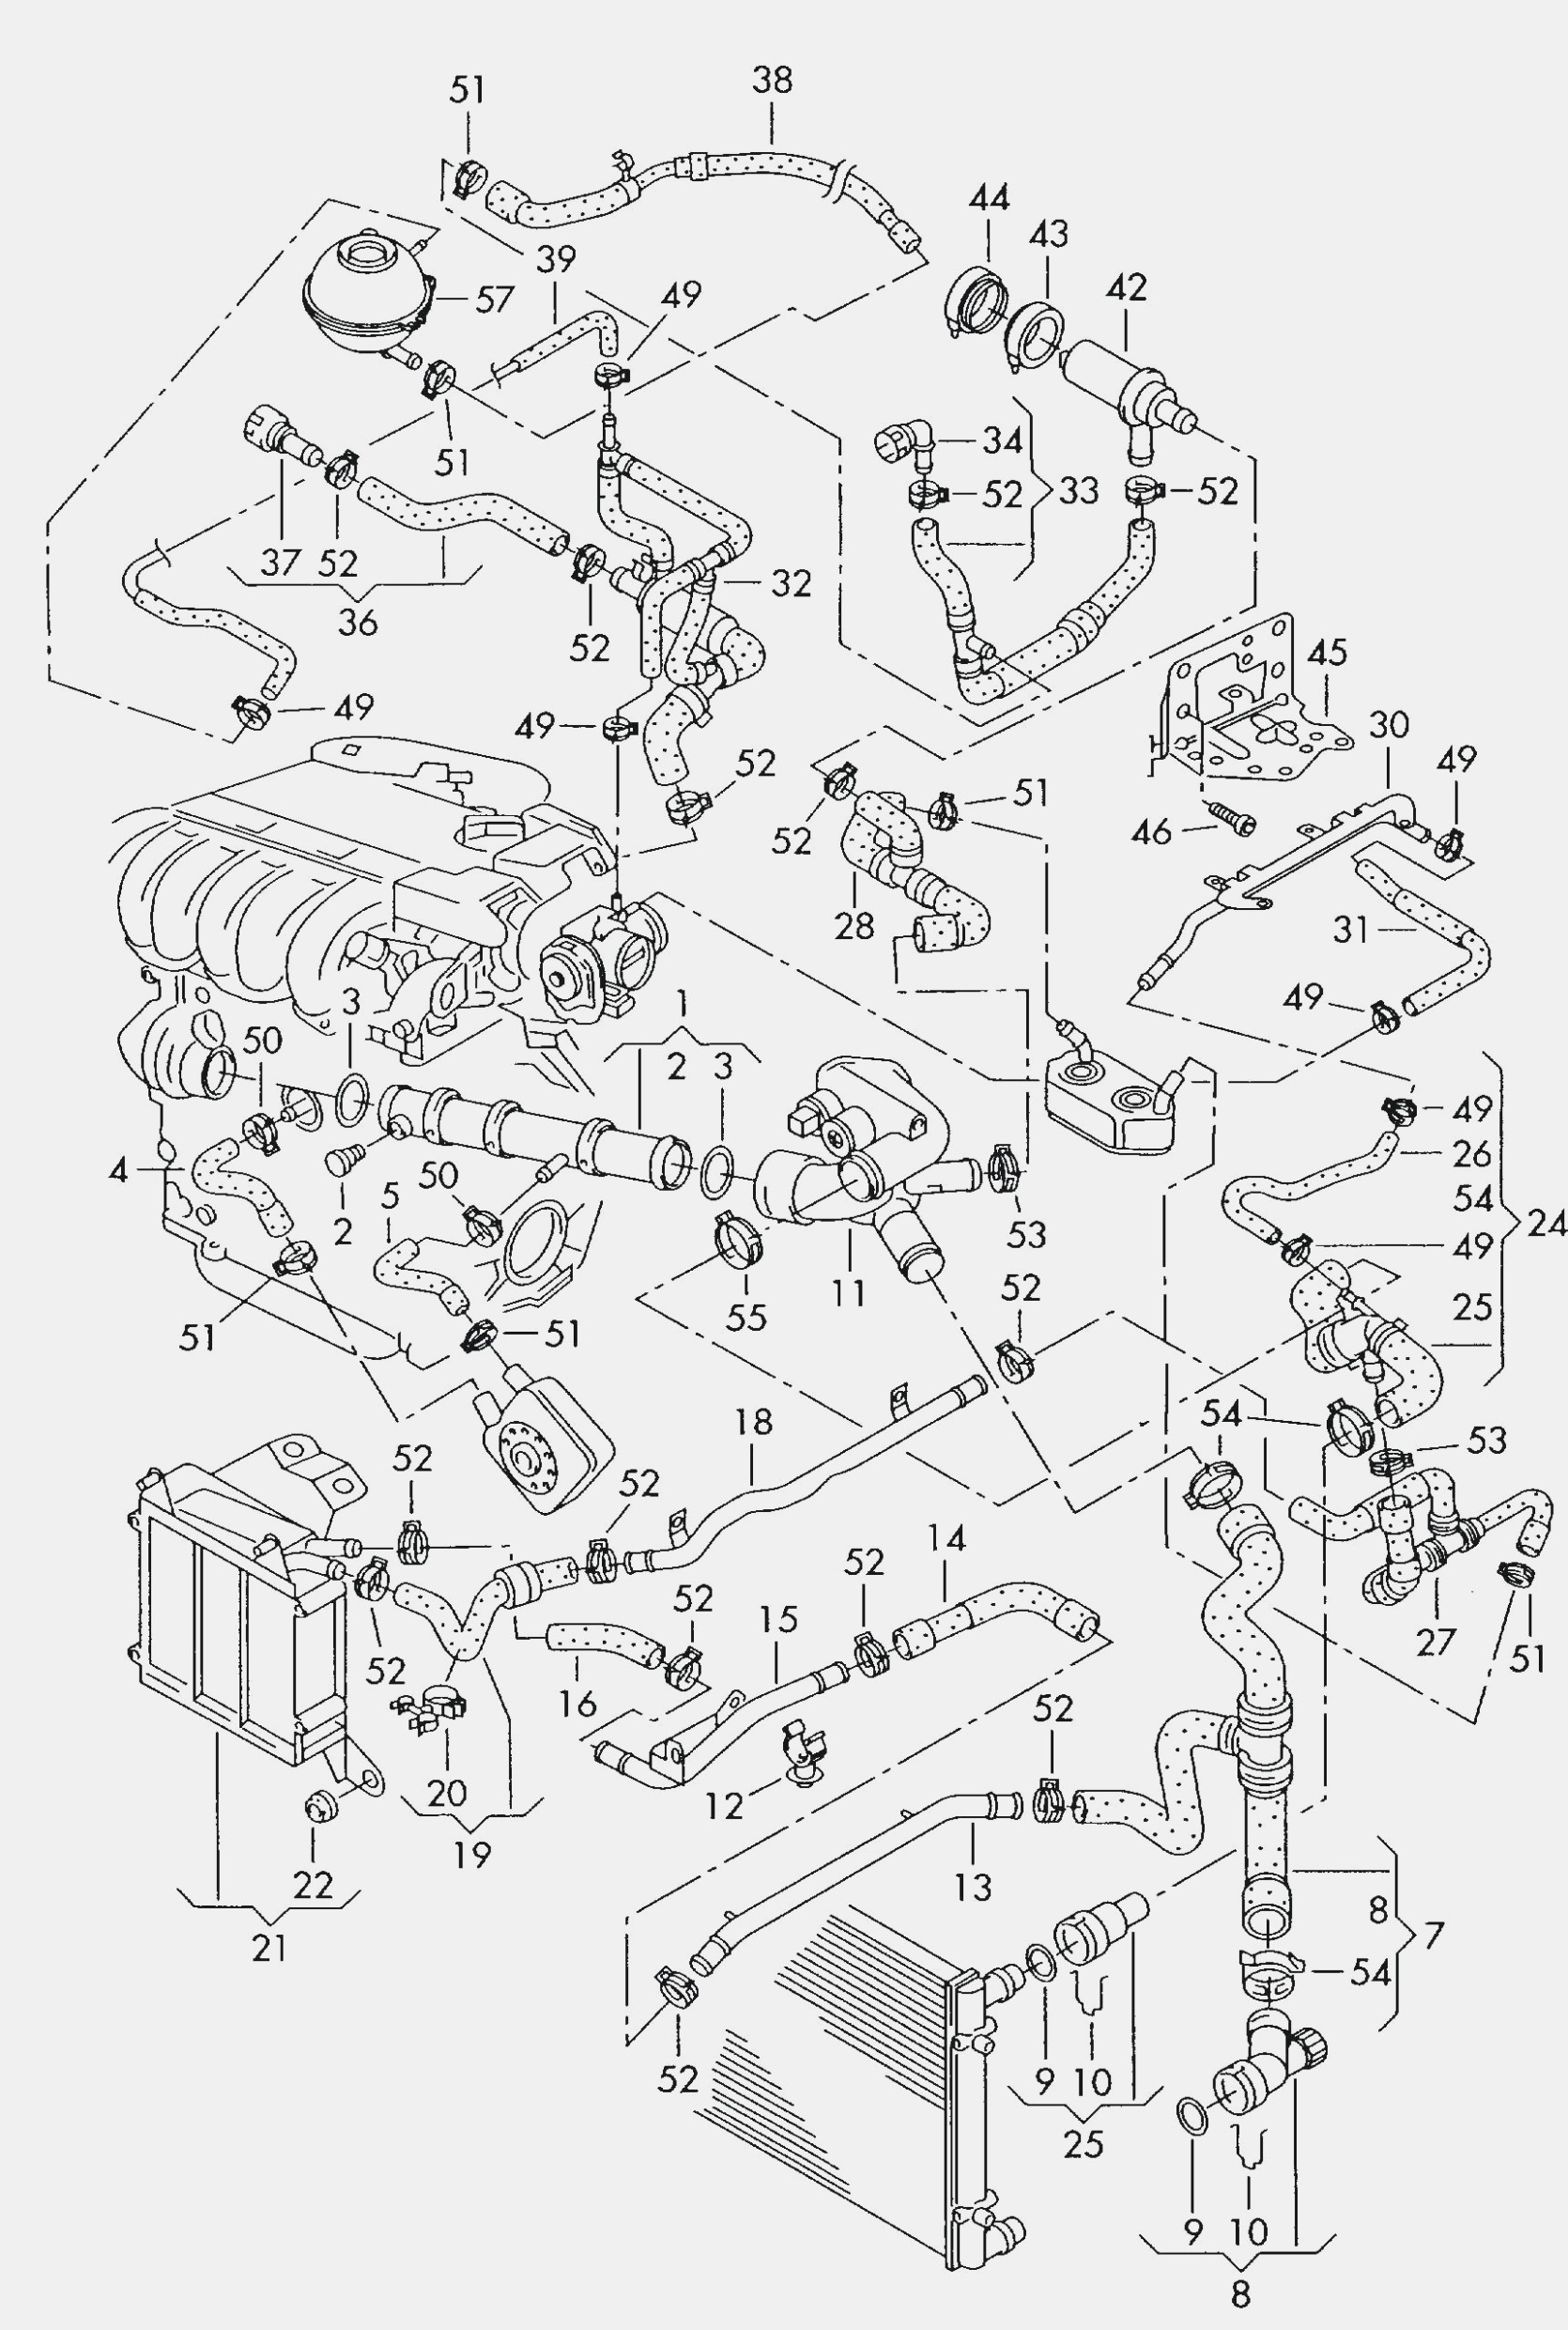 2002 Vw Beetle Engine Diagram Volkswagen Timing Belt and Cover Volkswagen Circuit Diagrams Of 2002 Vw Beetle Engine Diagram